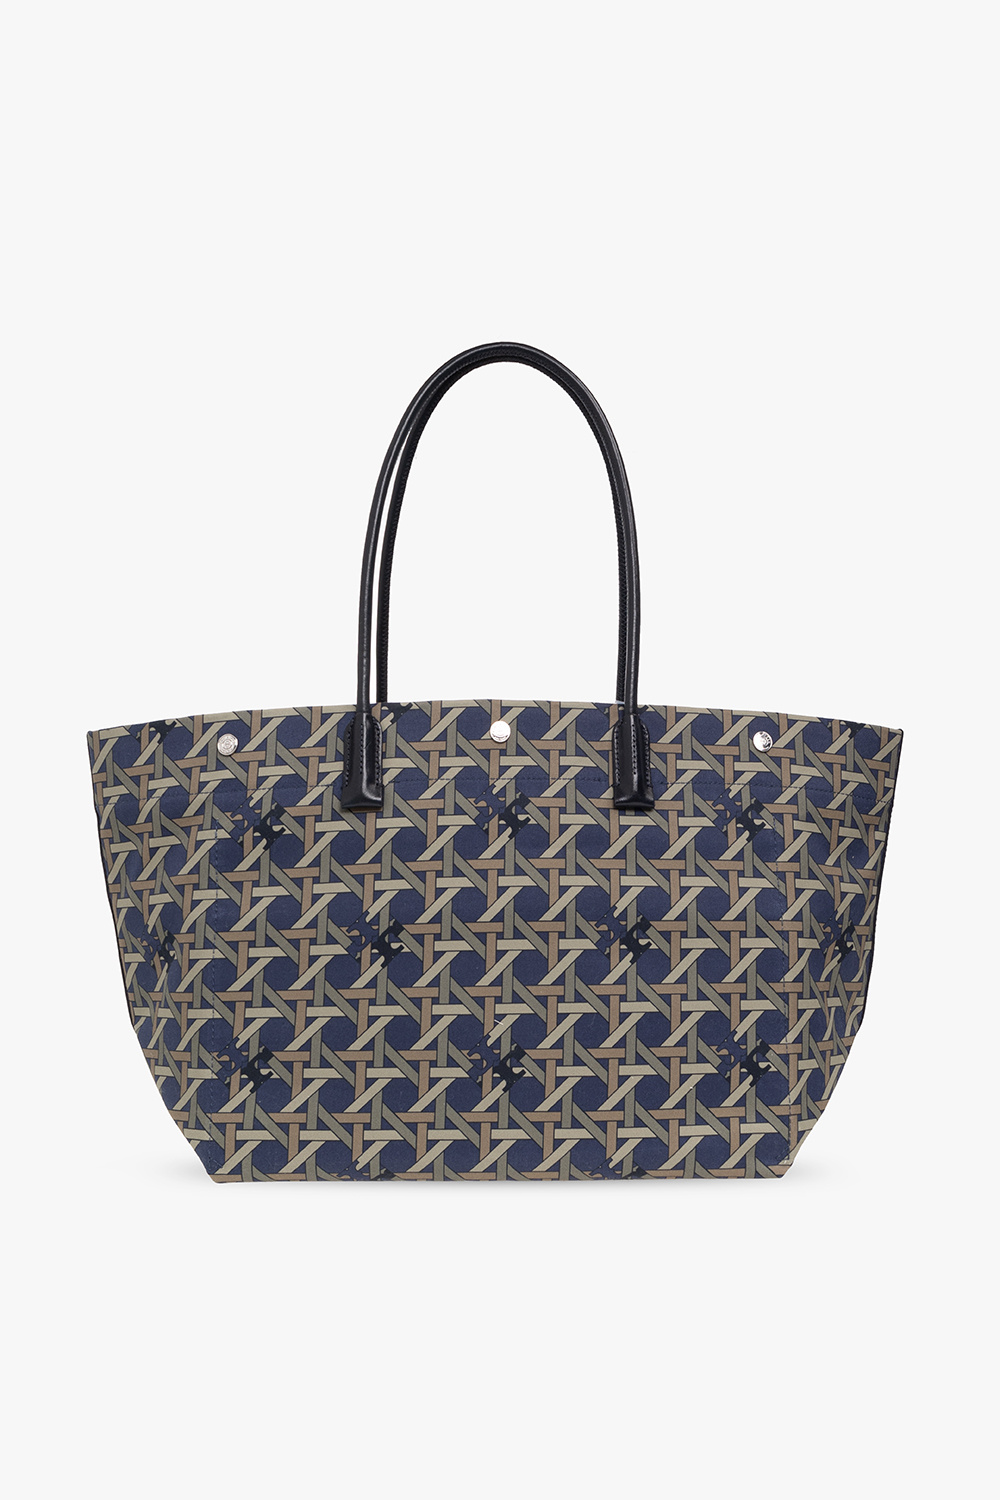 Tory Burch ‘Basketweave’ shopper bag